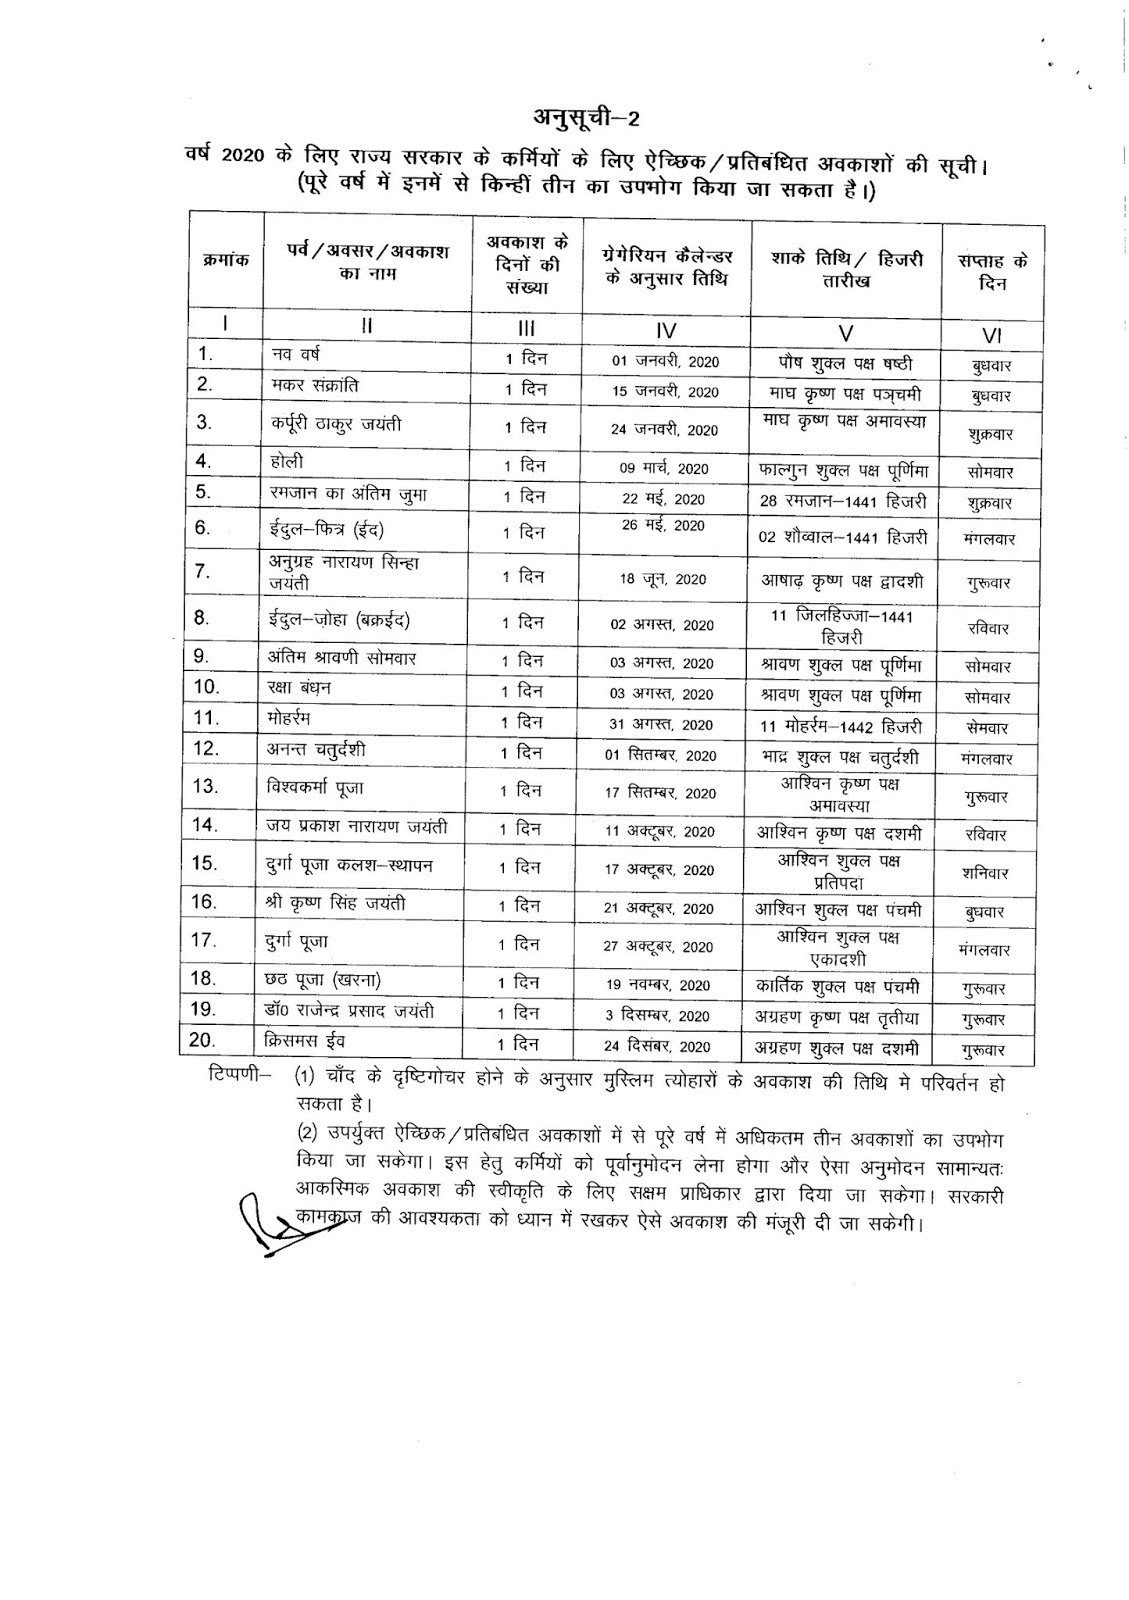 Bihar Government Calendar 2020 #educratsweb with regard to Bihar Govt Holidays 2020